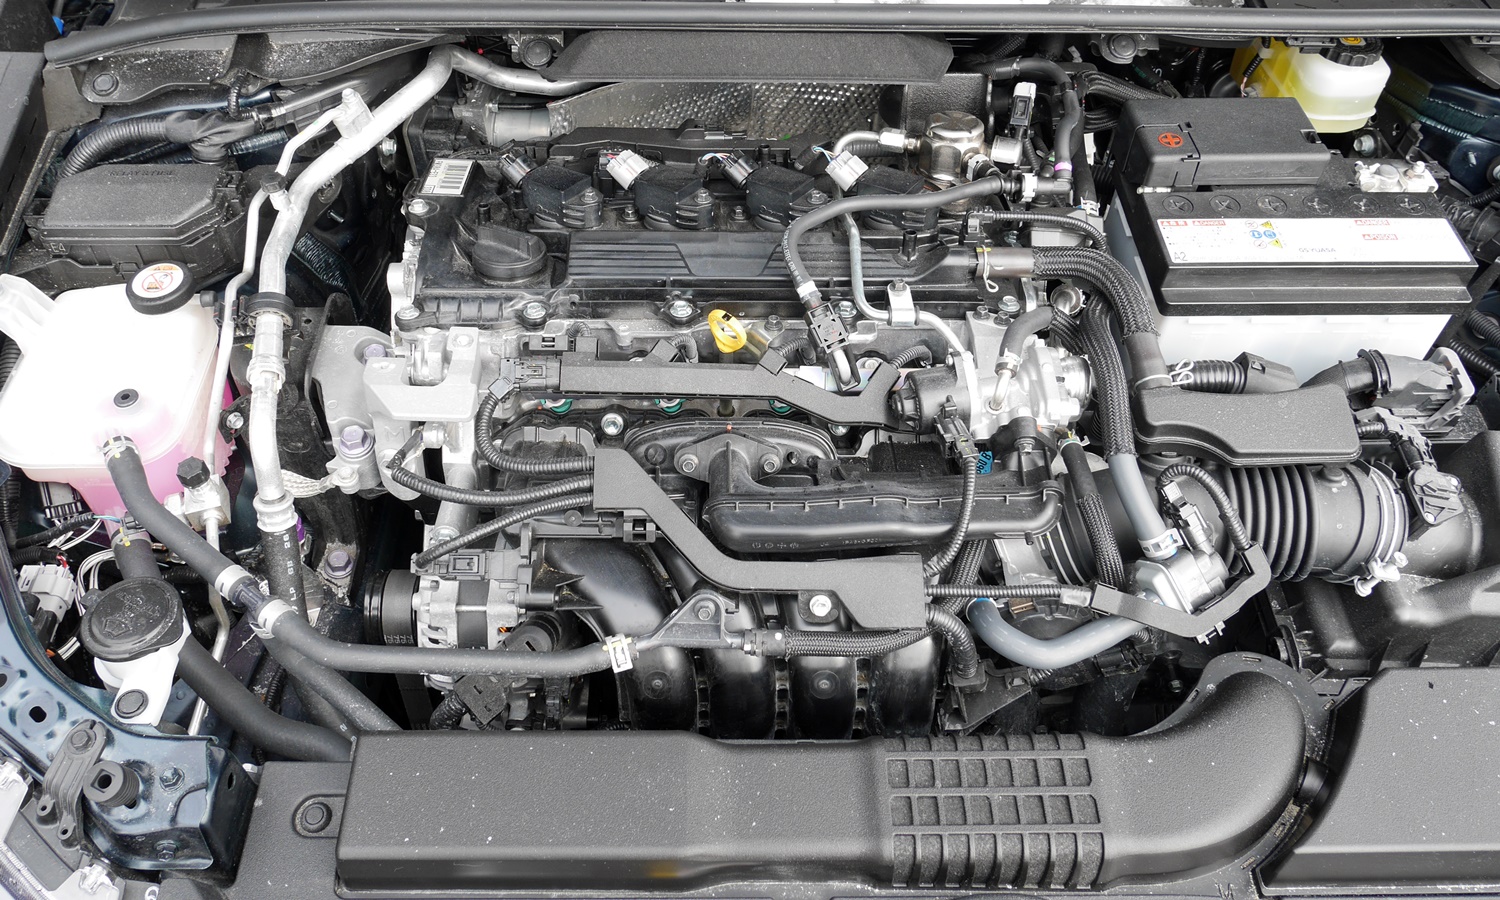 Corolla Hatchback Reviews: Toyota Corolla Hatchback engine